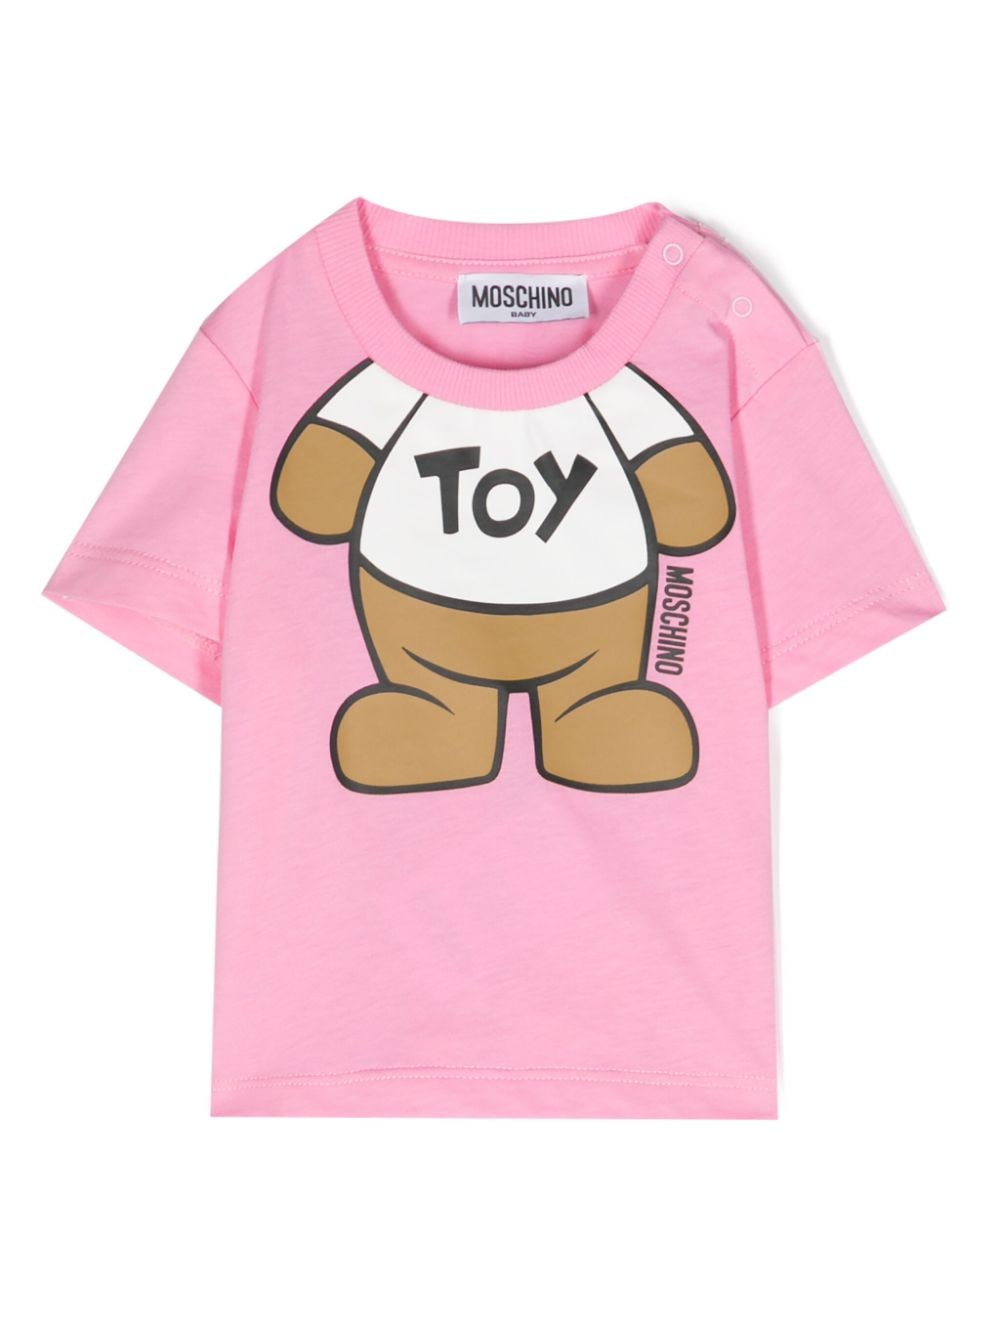 T-shirt rosa Teddy bear toy neonata